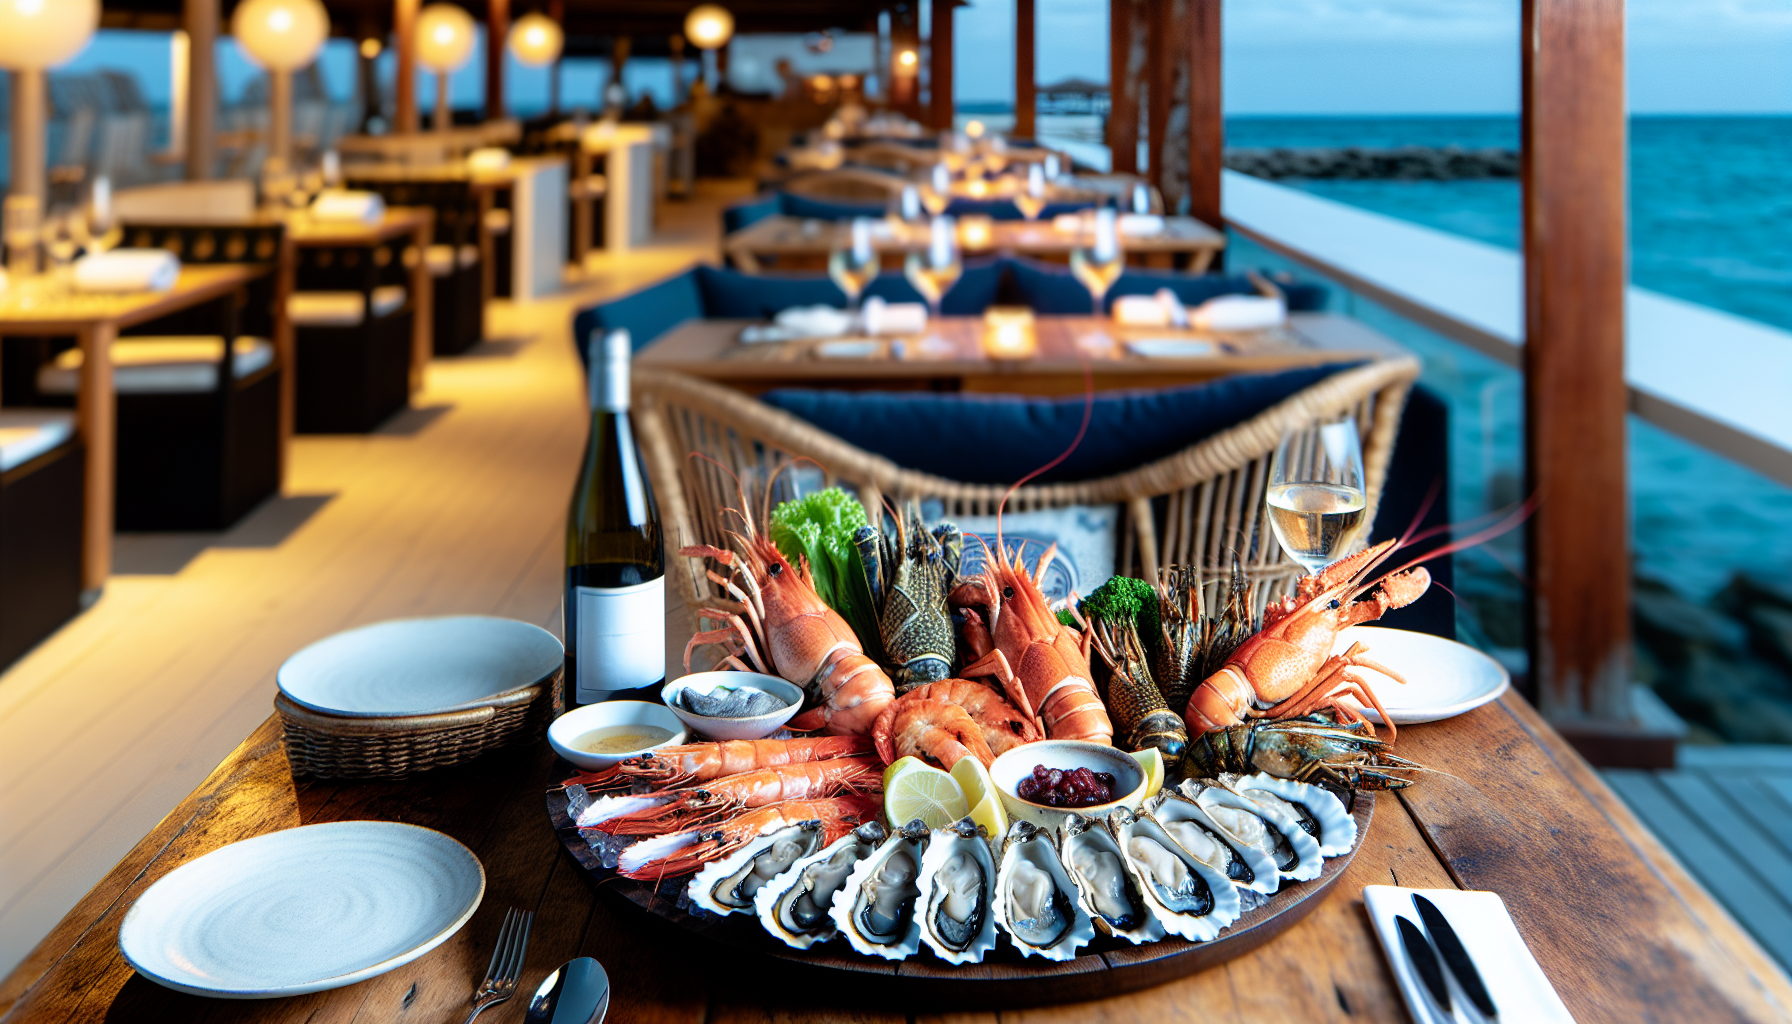 Exquisite fresh seafood dishes at Burlock Coast, Ritz Carlton Fort Lauderdale